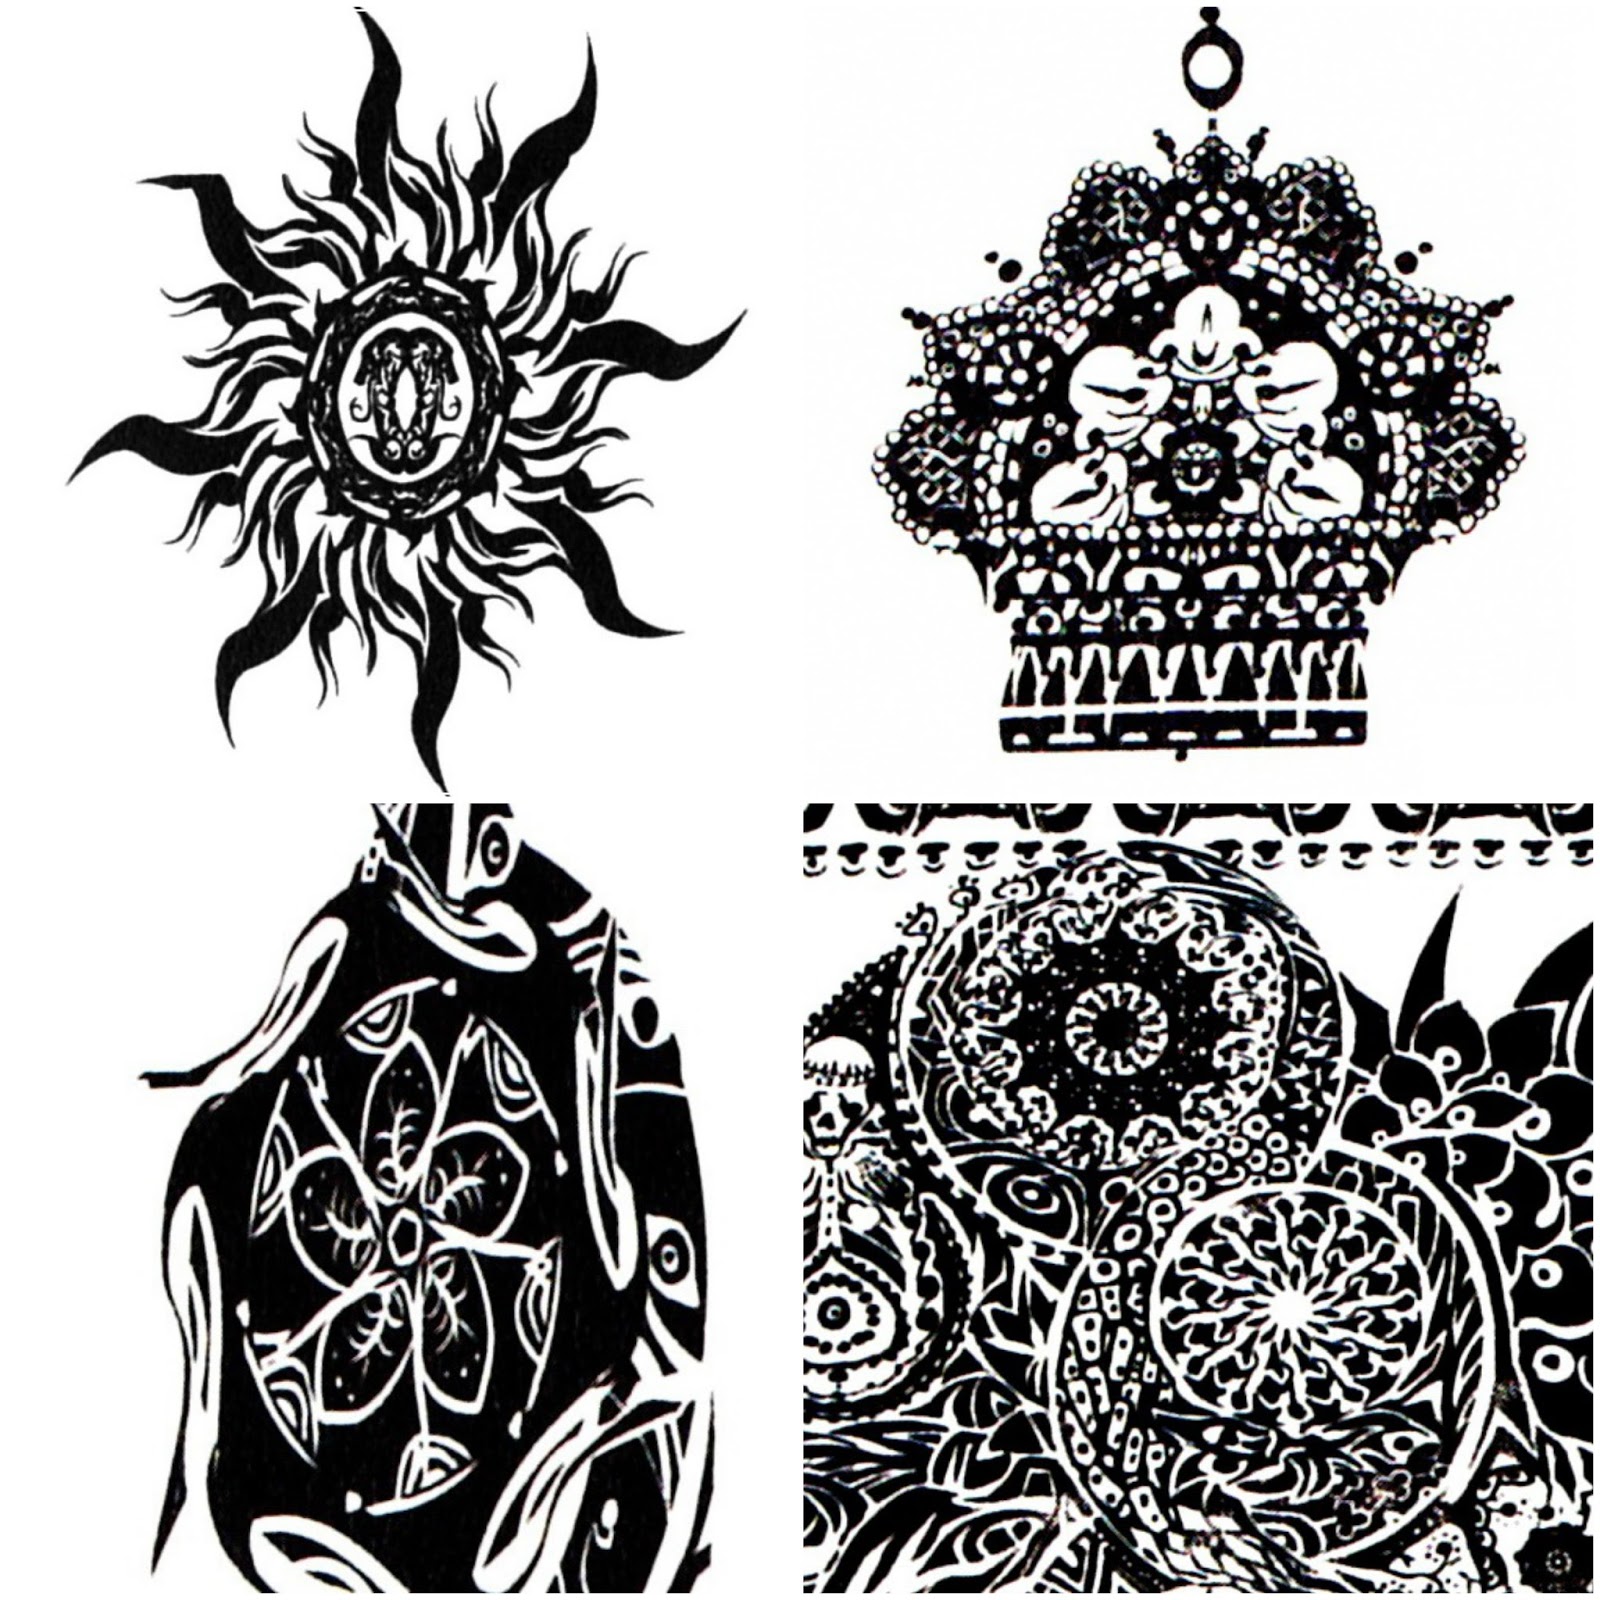 The Clown King Uta's Flower Tattoos (part 1)